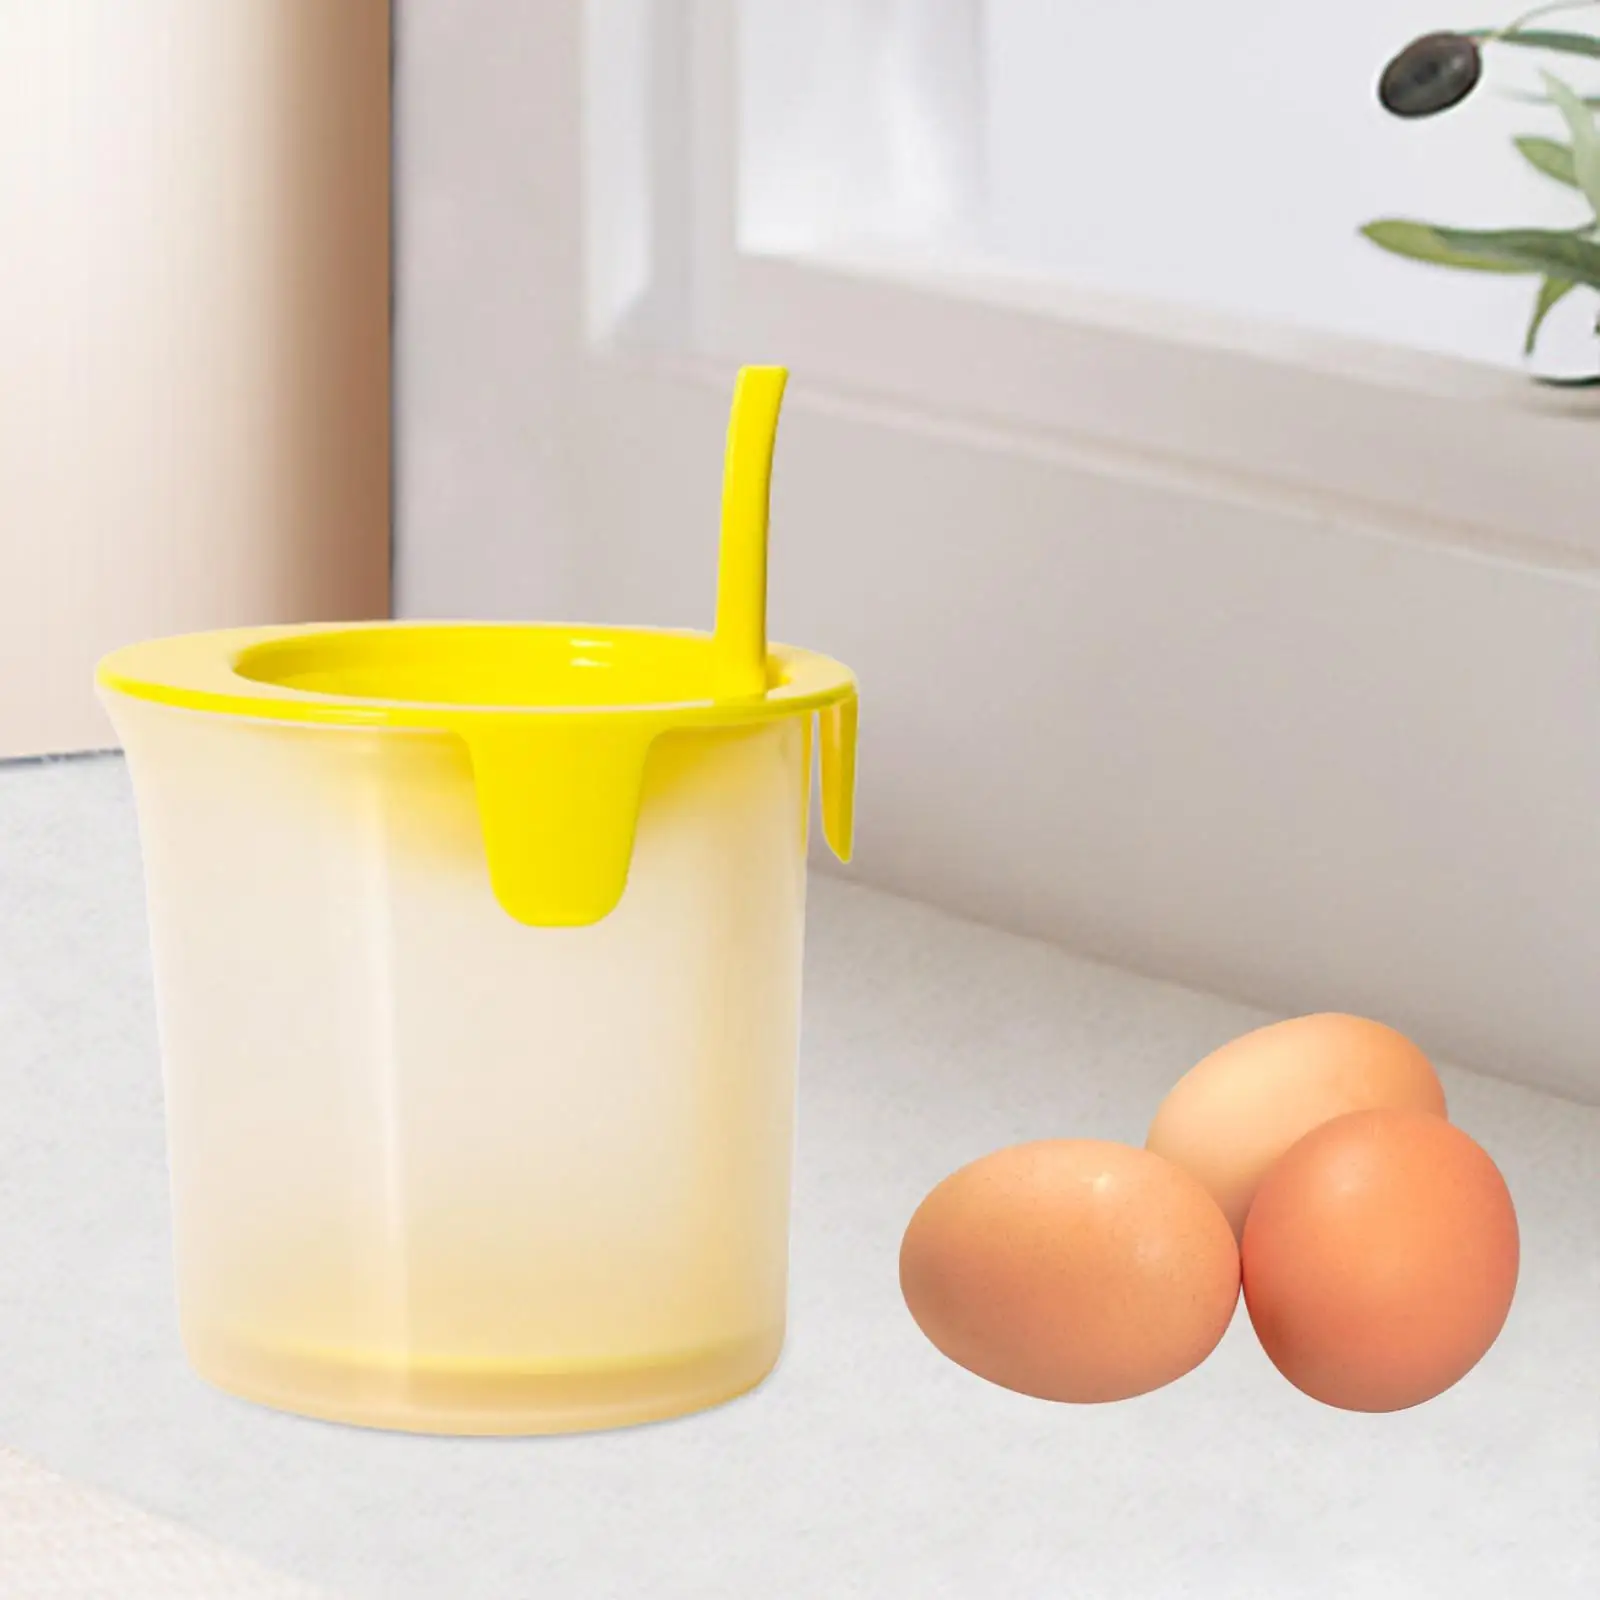 Egg White Separator, Egg Divider Tool, Egg Divider, Portable Lightweight Kitchen Accessories